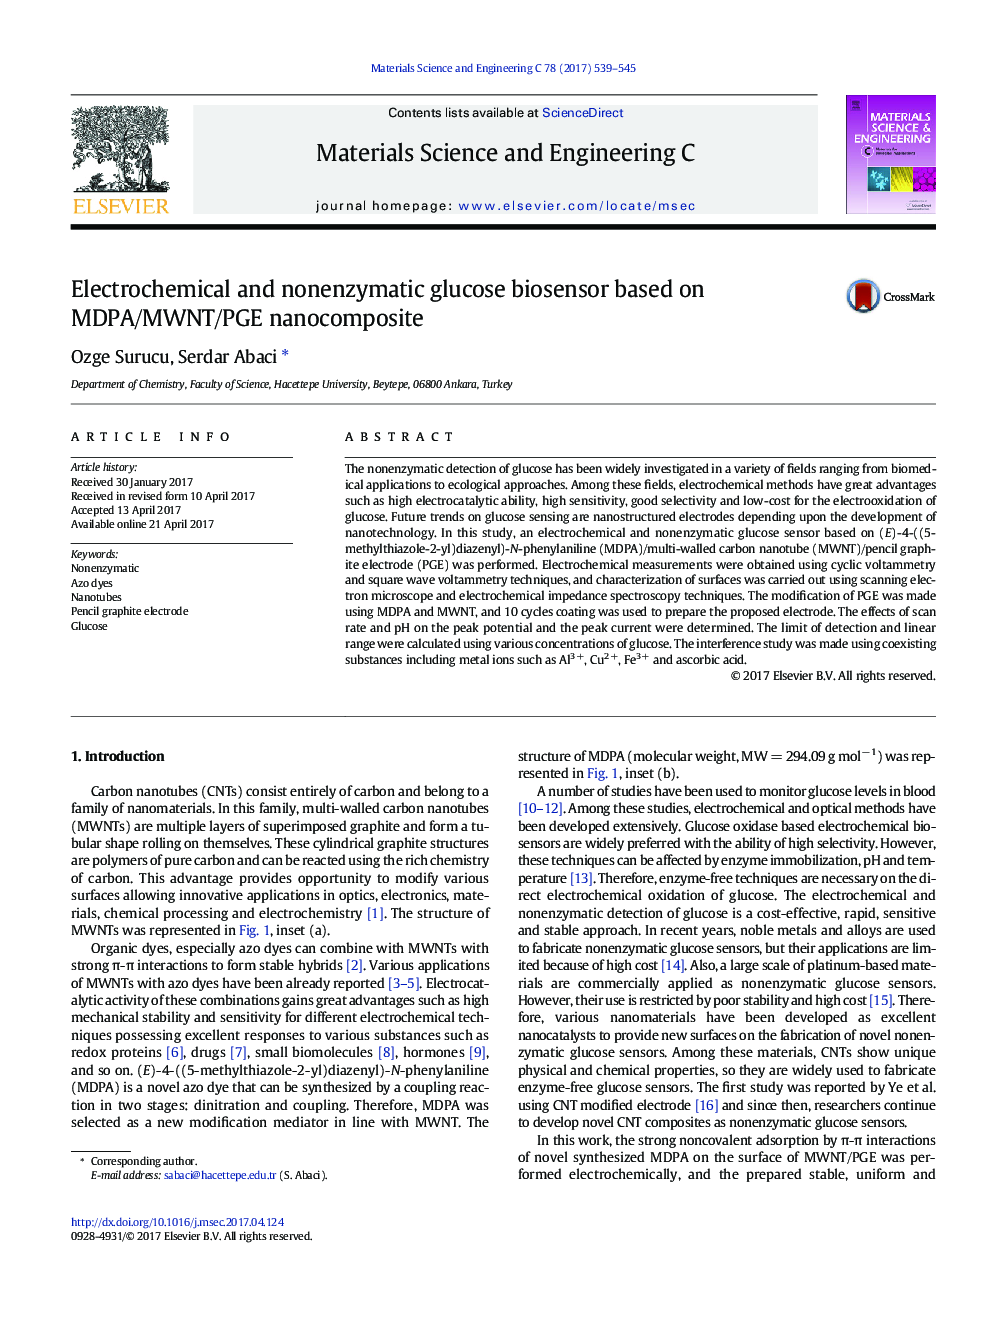 Electrochemical and nonenzymatic glucose biosensor based on MDPA/MWNT/PGE nanocomposite